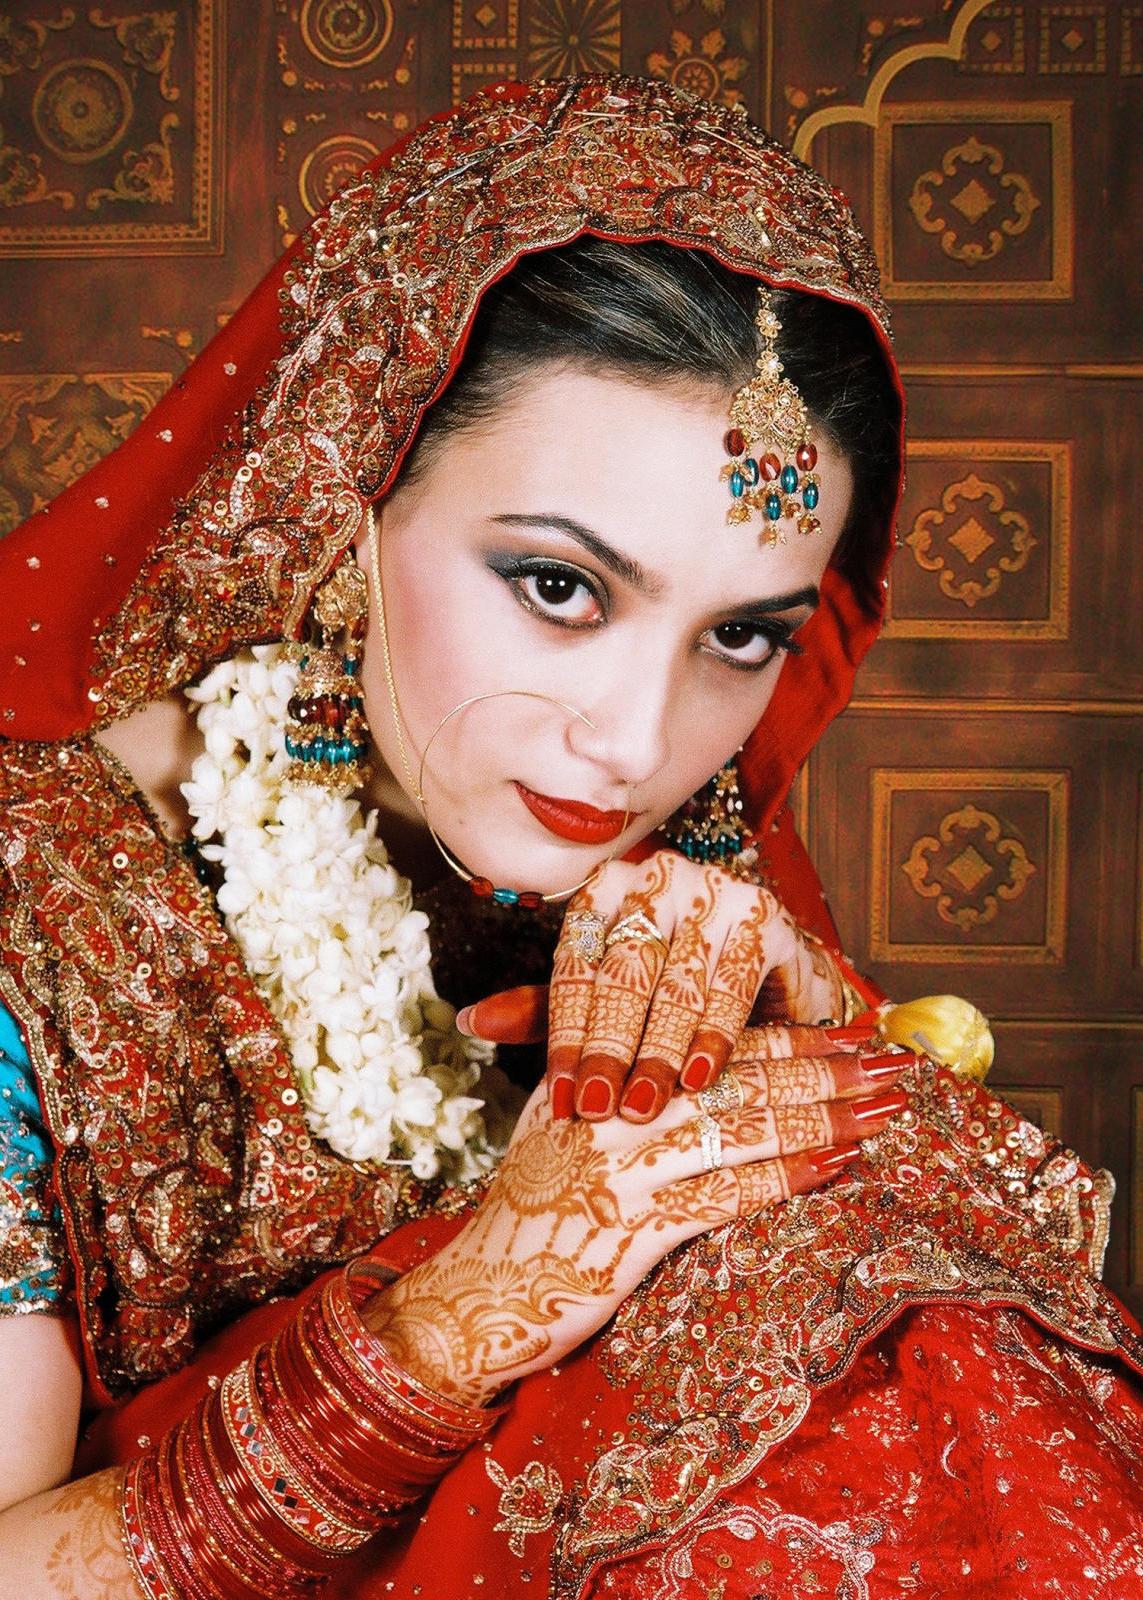 PAKISTANI WEDDING ART